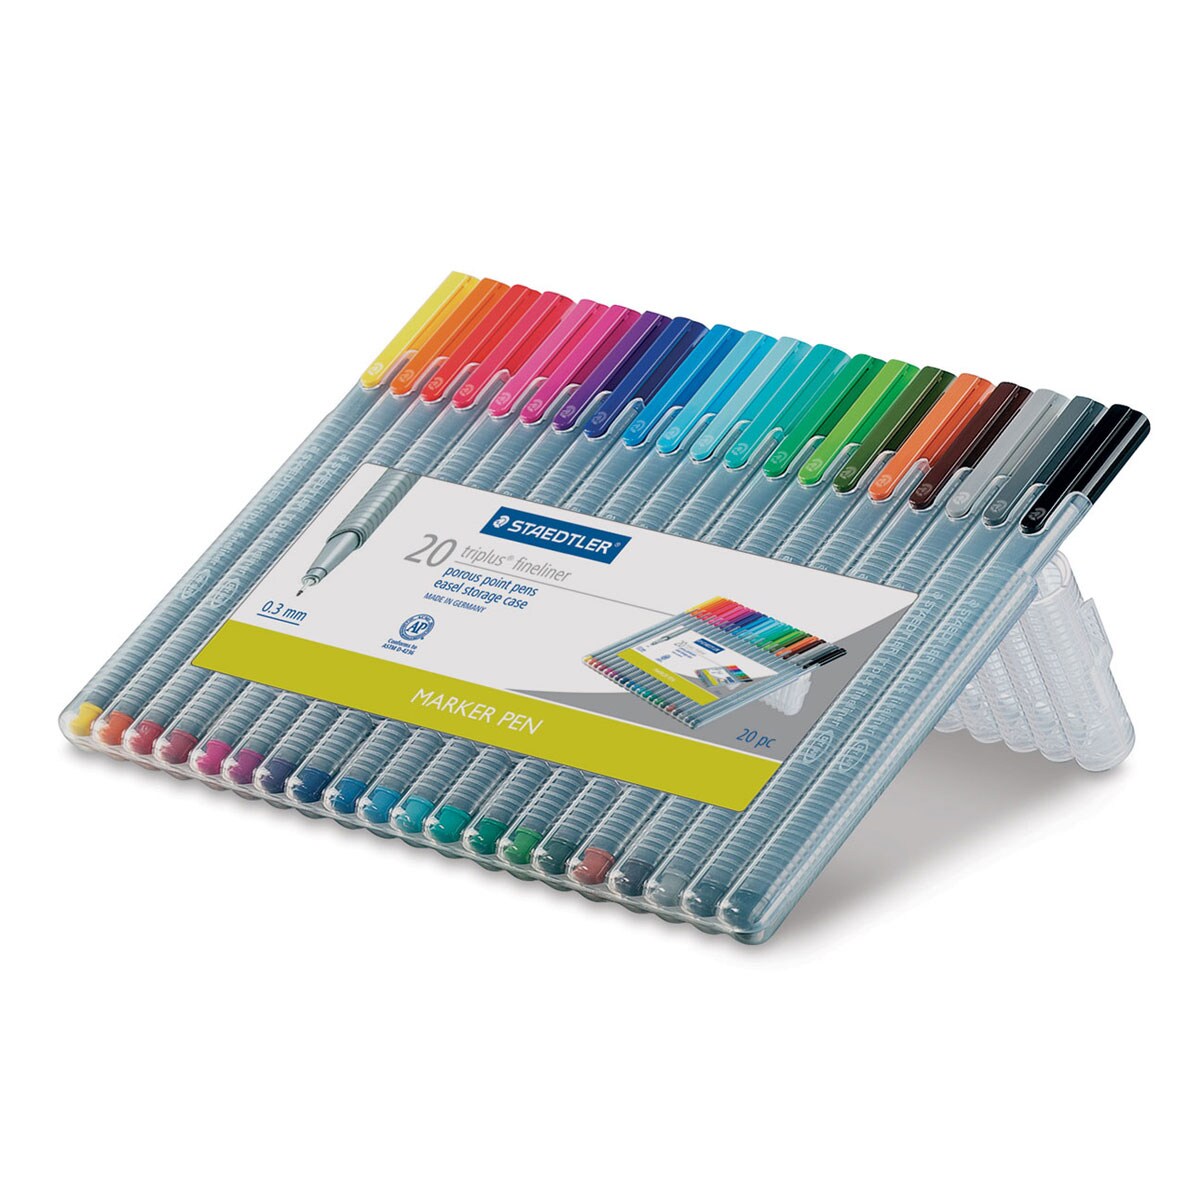 Staedtler Triplus Fineliner Pen - Assorted Colors, Set of 20